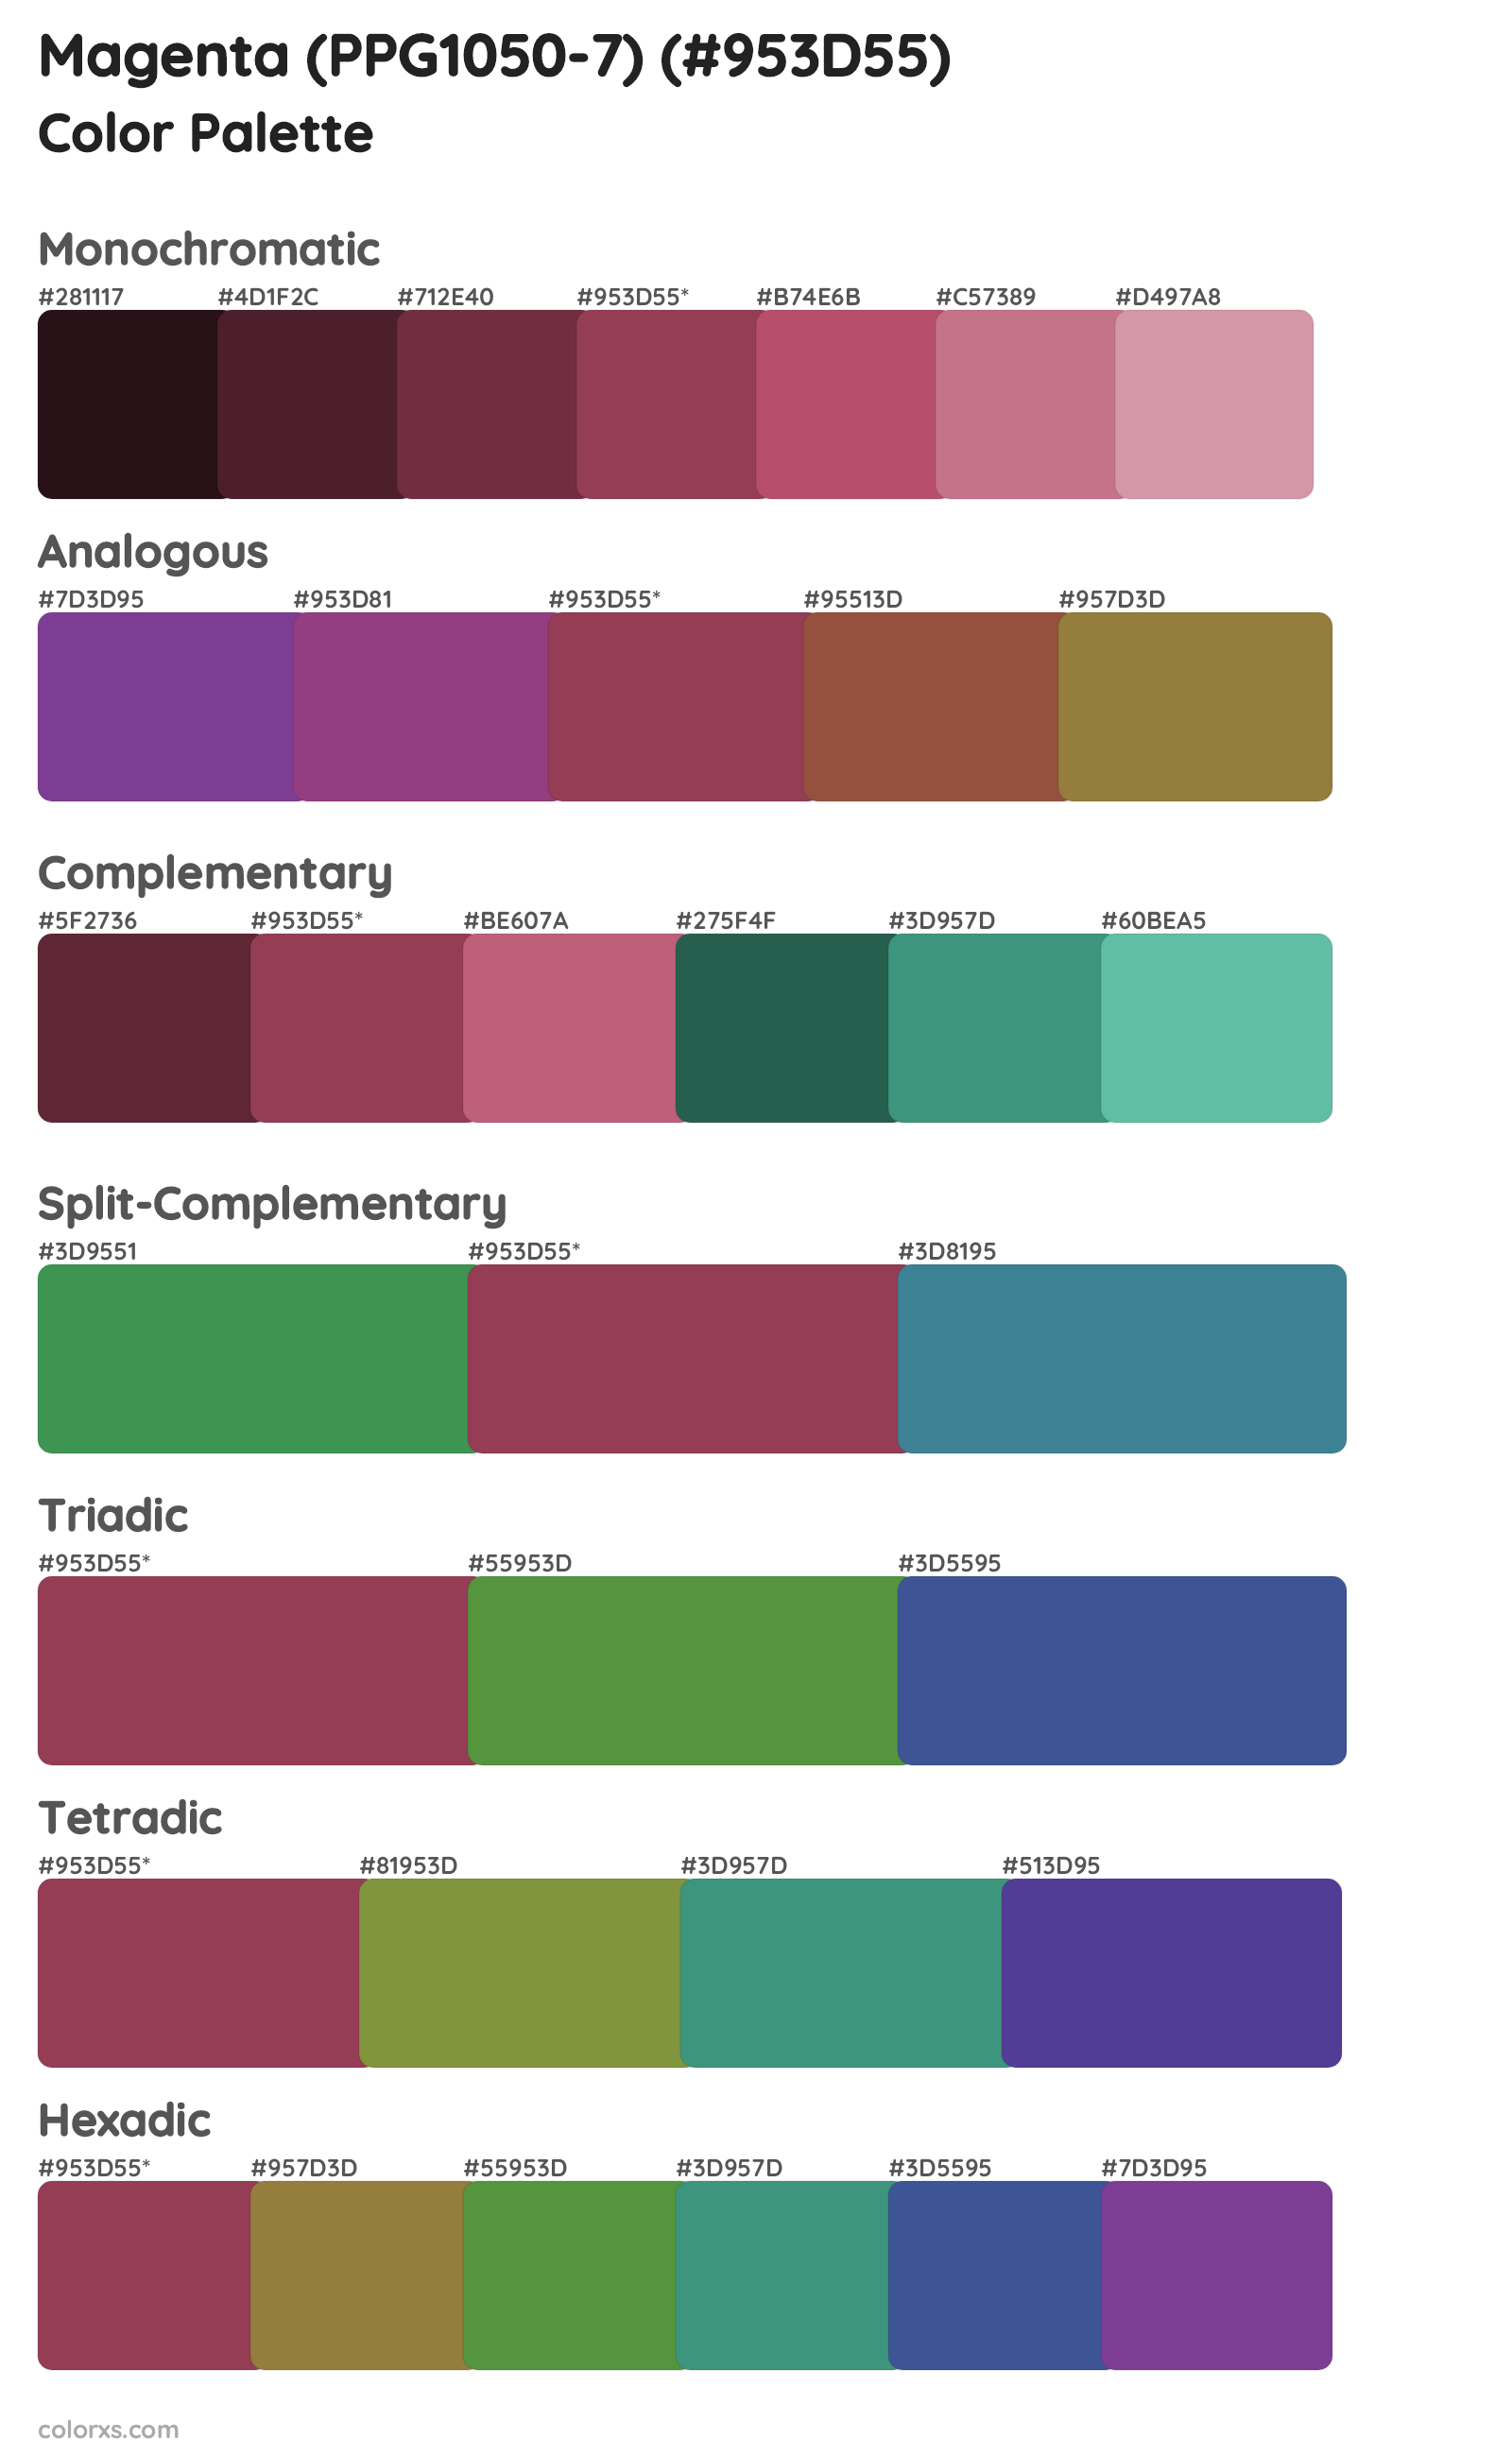 Magenta (PPG1050-7) Color Scheme Palettes